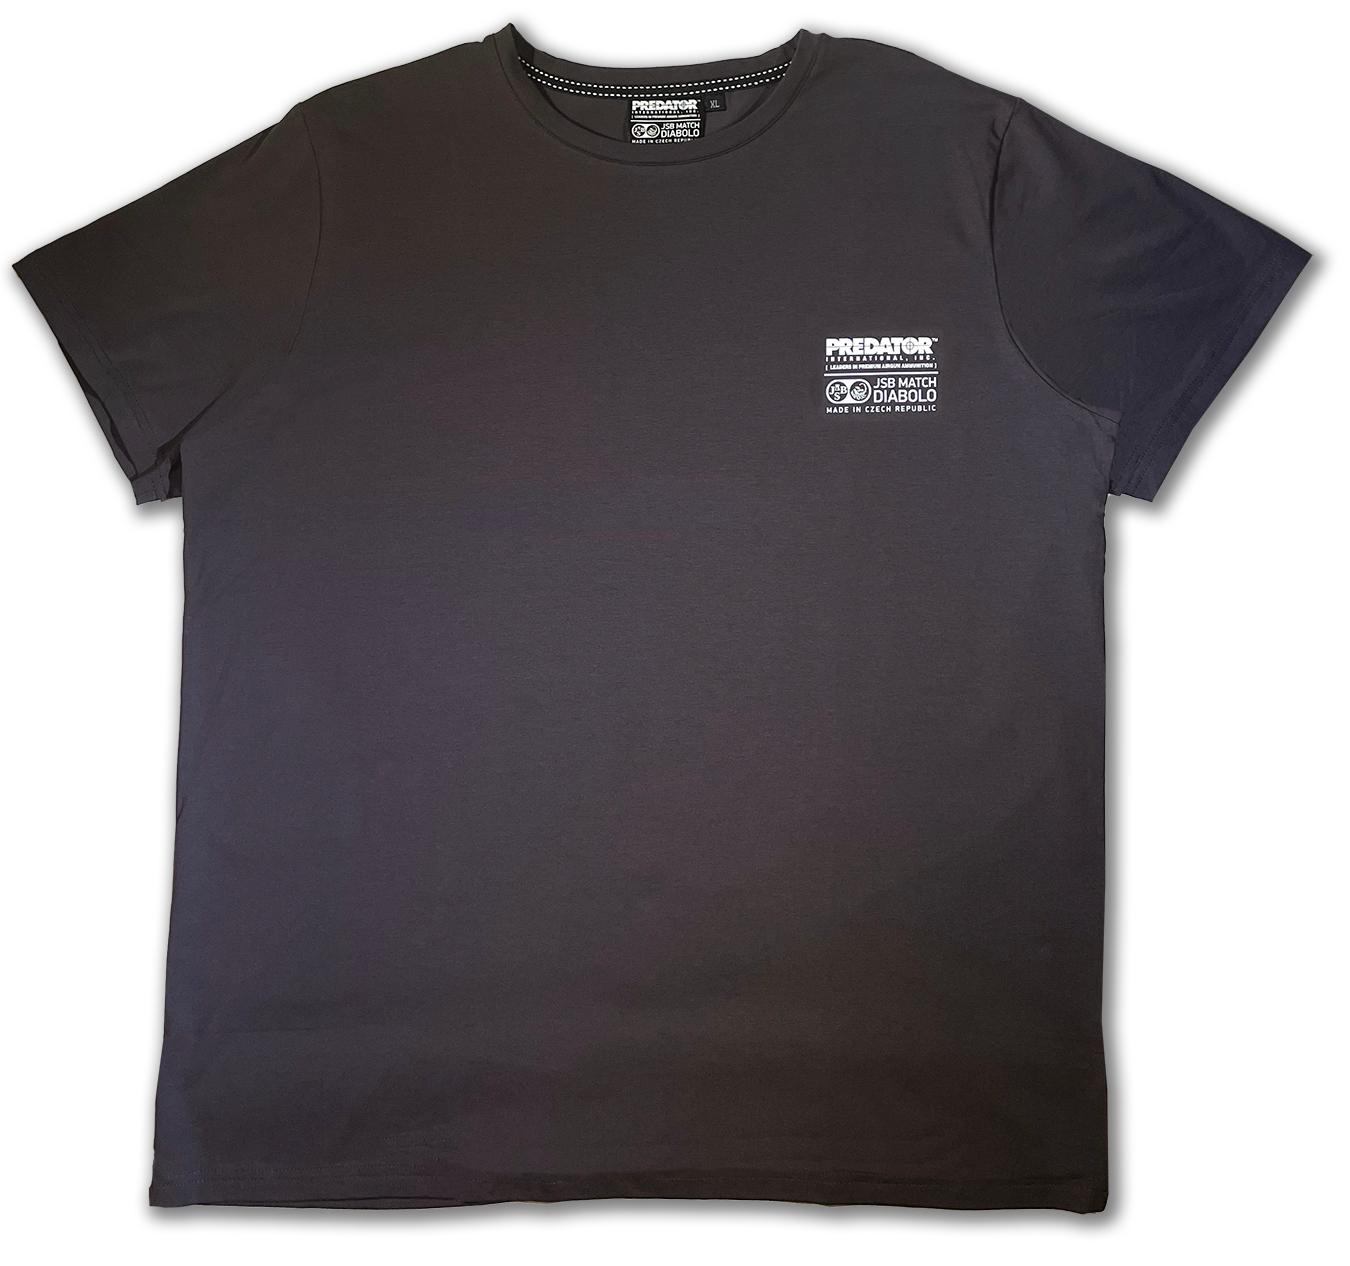 JSB Predator Short Sleeve Cotton/Spandex T-Shirt, Grey, Extra Large